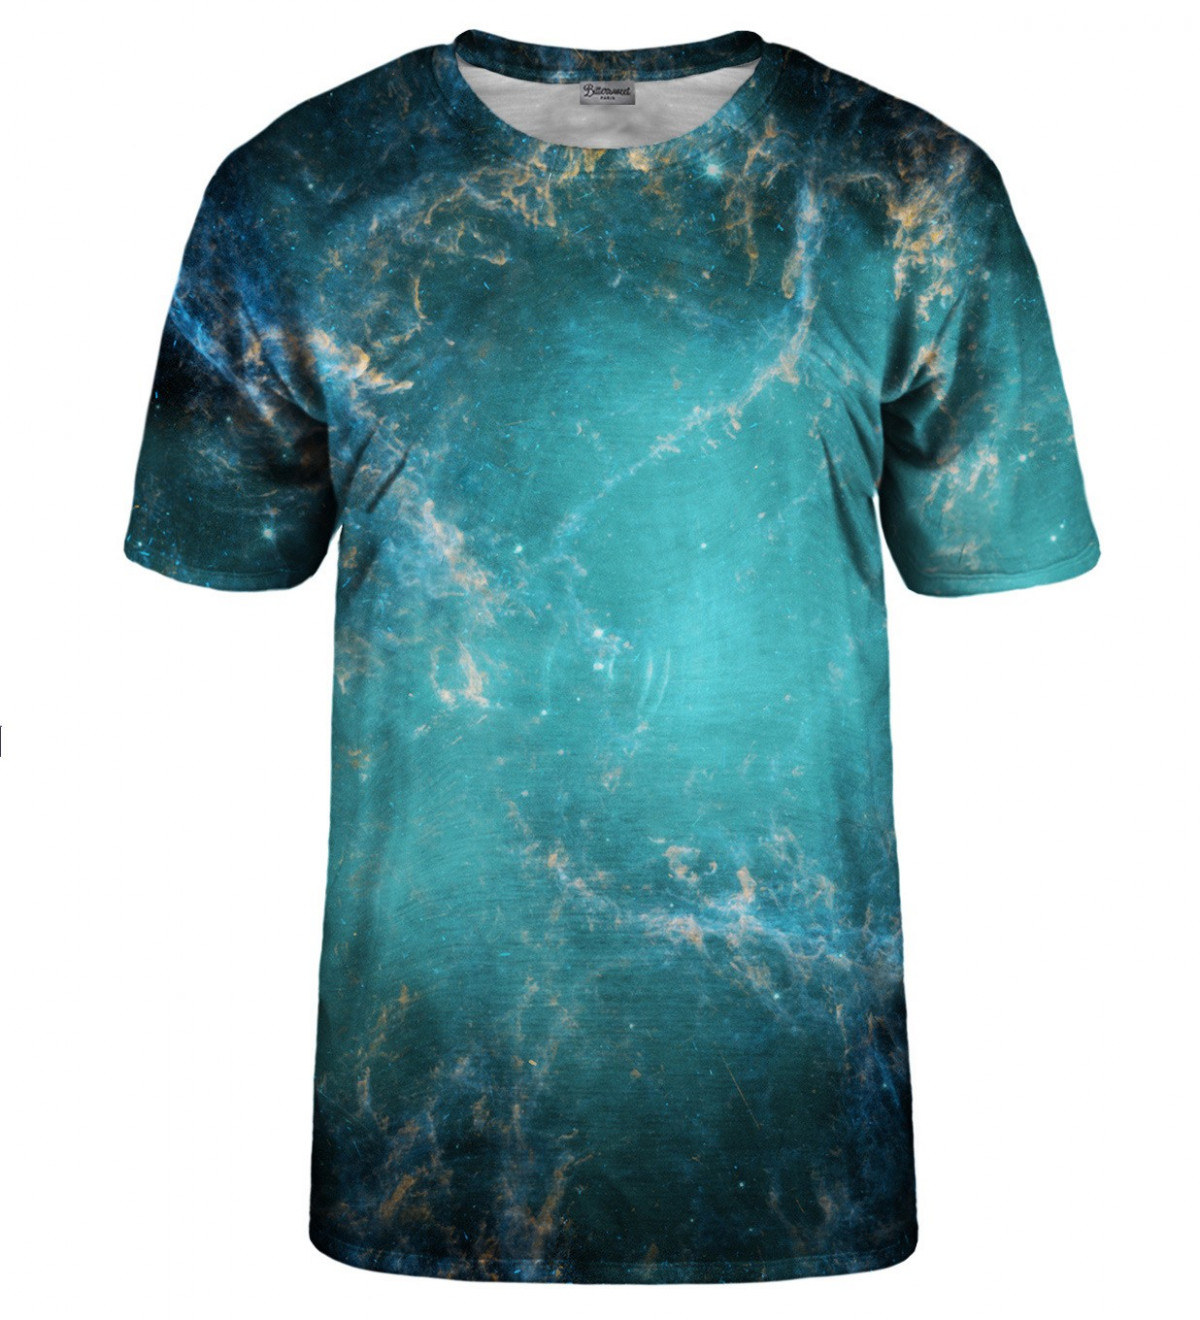 Galaxy Abyss T-Shirt - XS